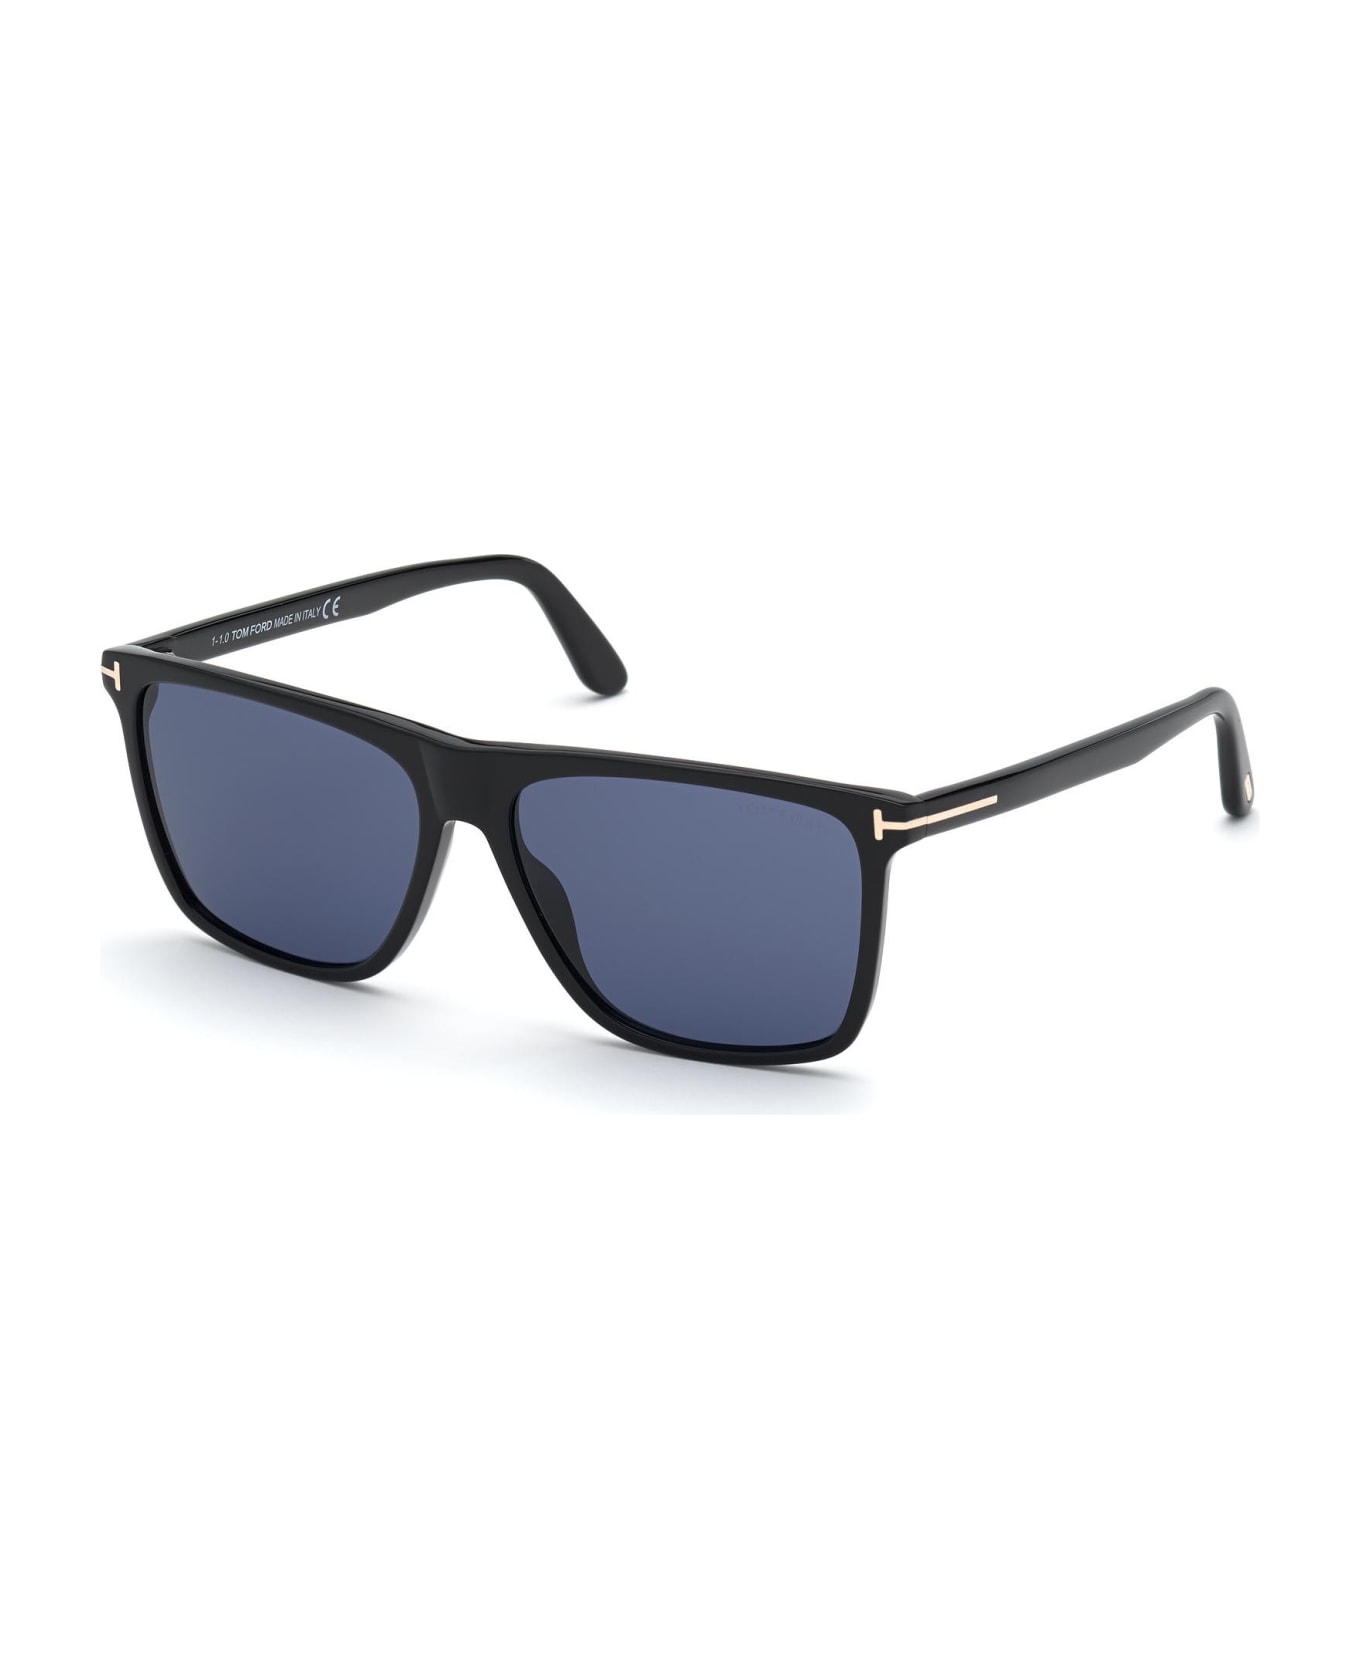 Tom Ford Eyewear Sunglasses - Nero/Blu